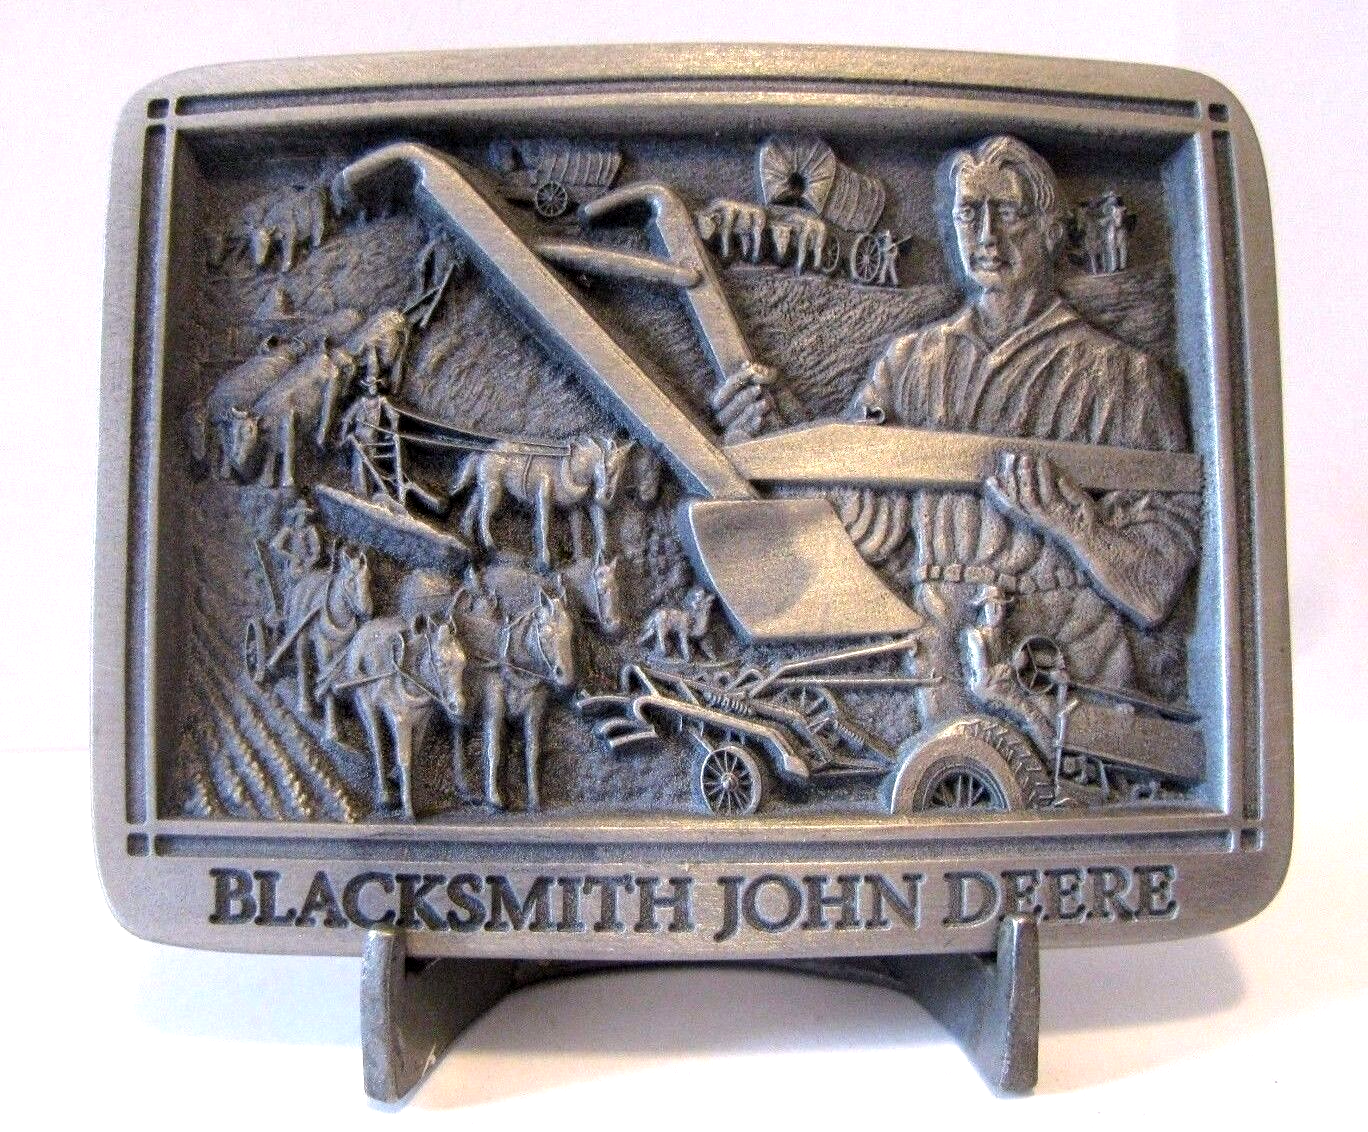 1999 John Deere Blacksmith A Tractor Plow Belt Buckle Limited Ed Hinton 1st Ser JOHN DEERE